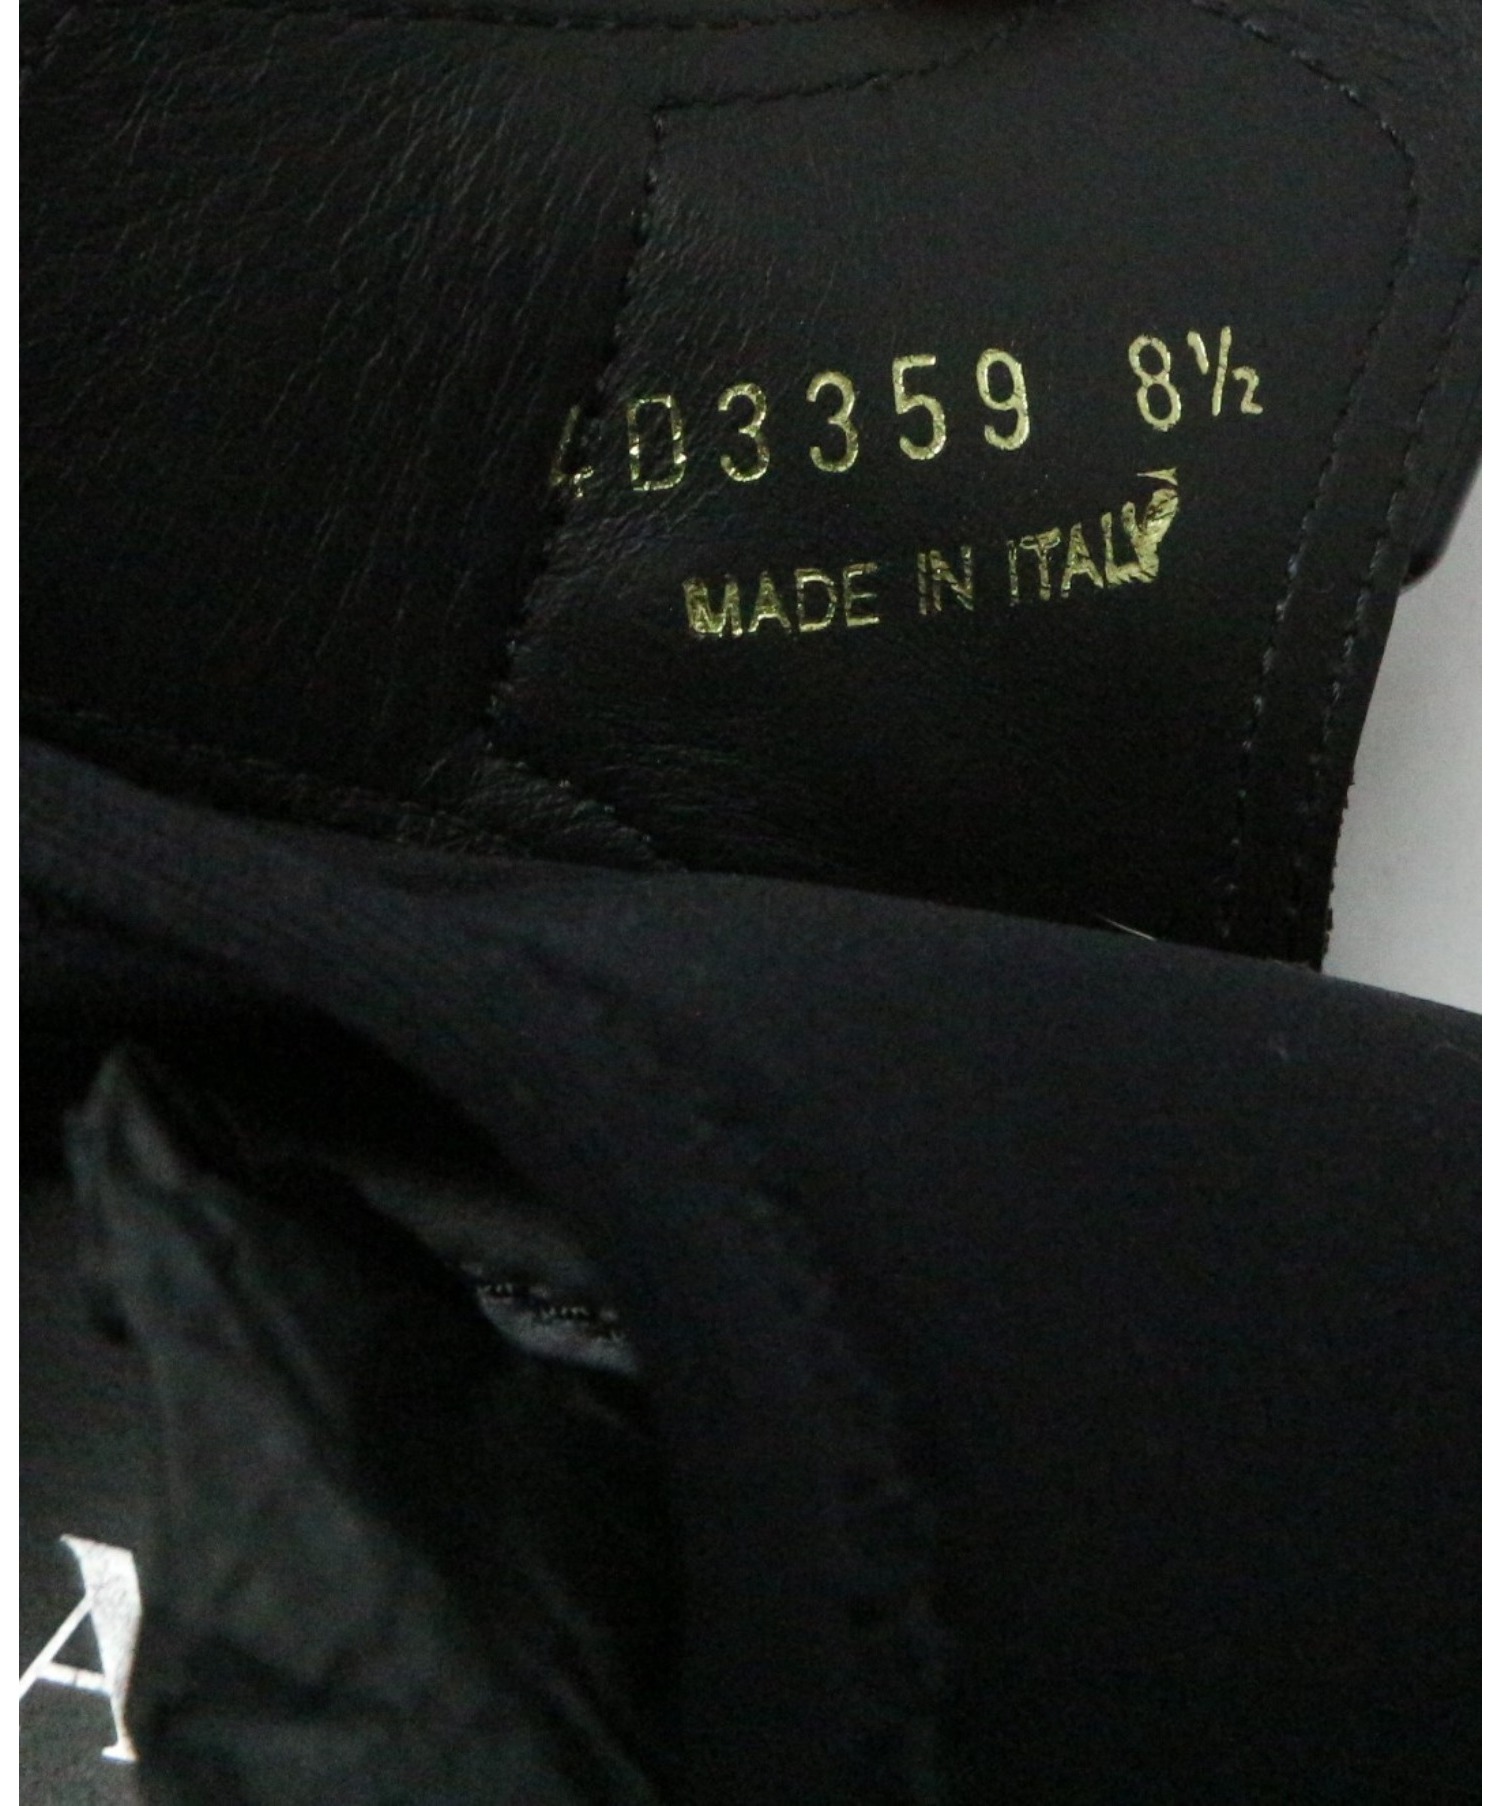 PRADA (プラダ) スニーカー ブラック サイズ:81/2 4D3359